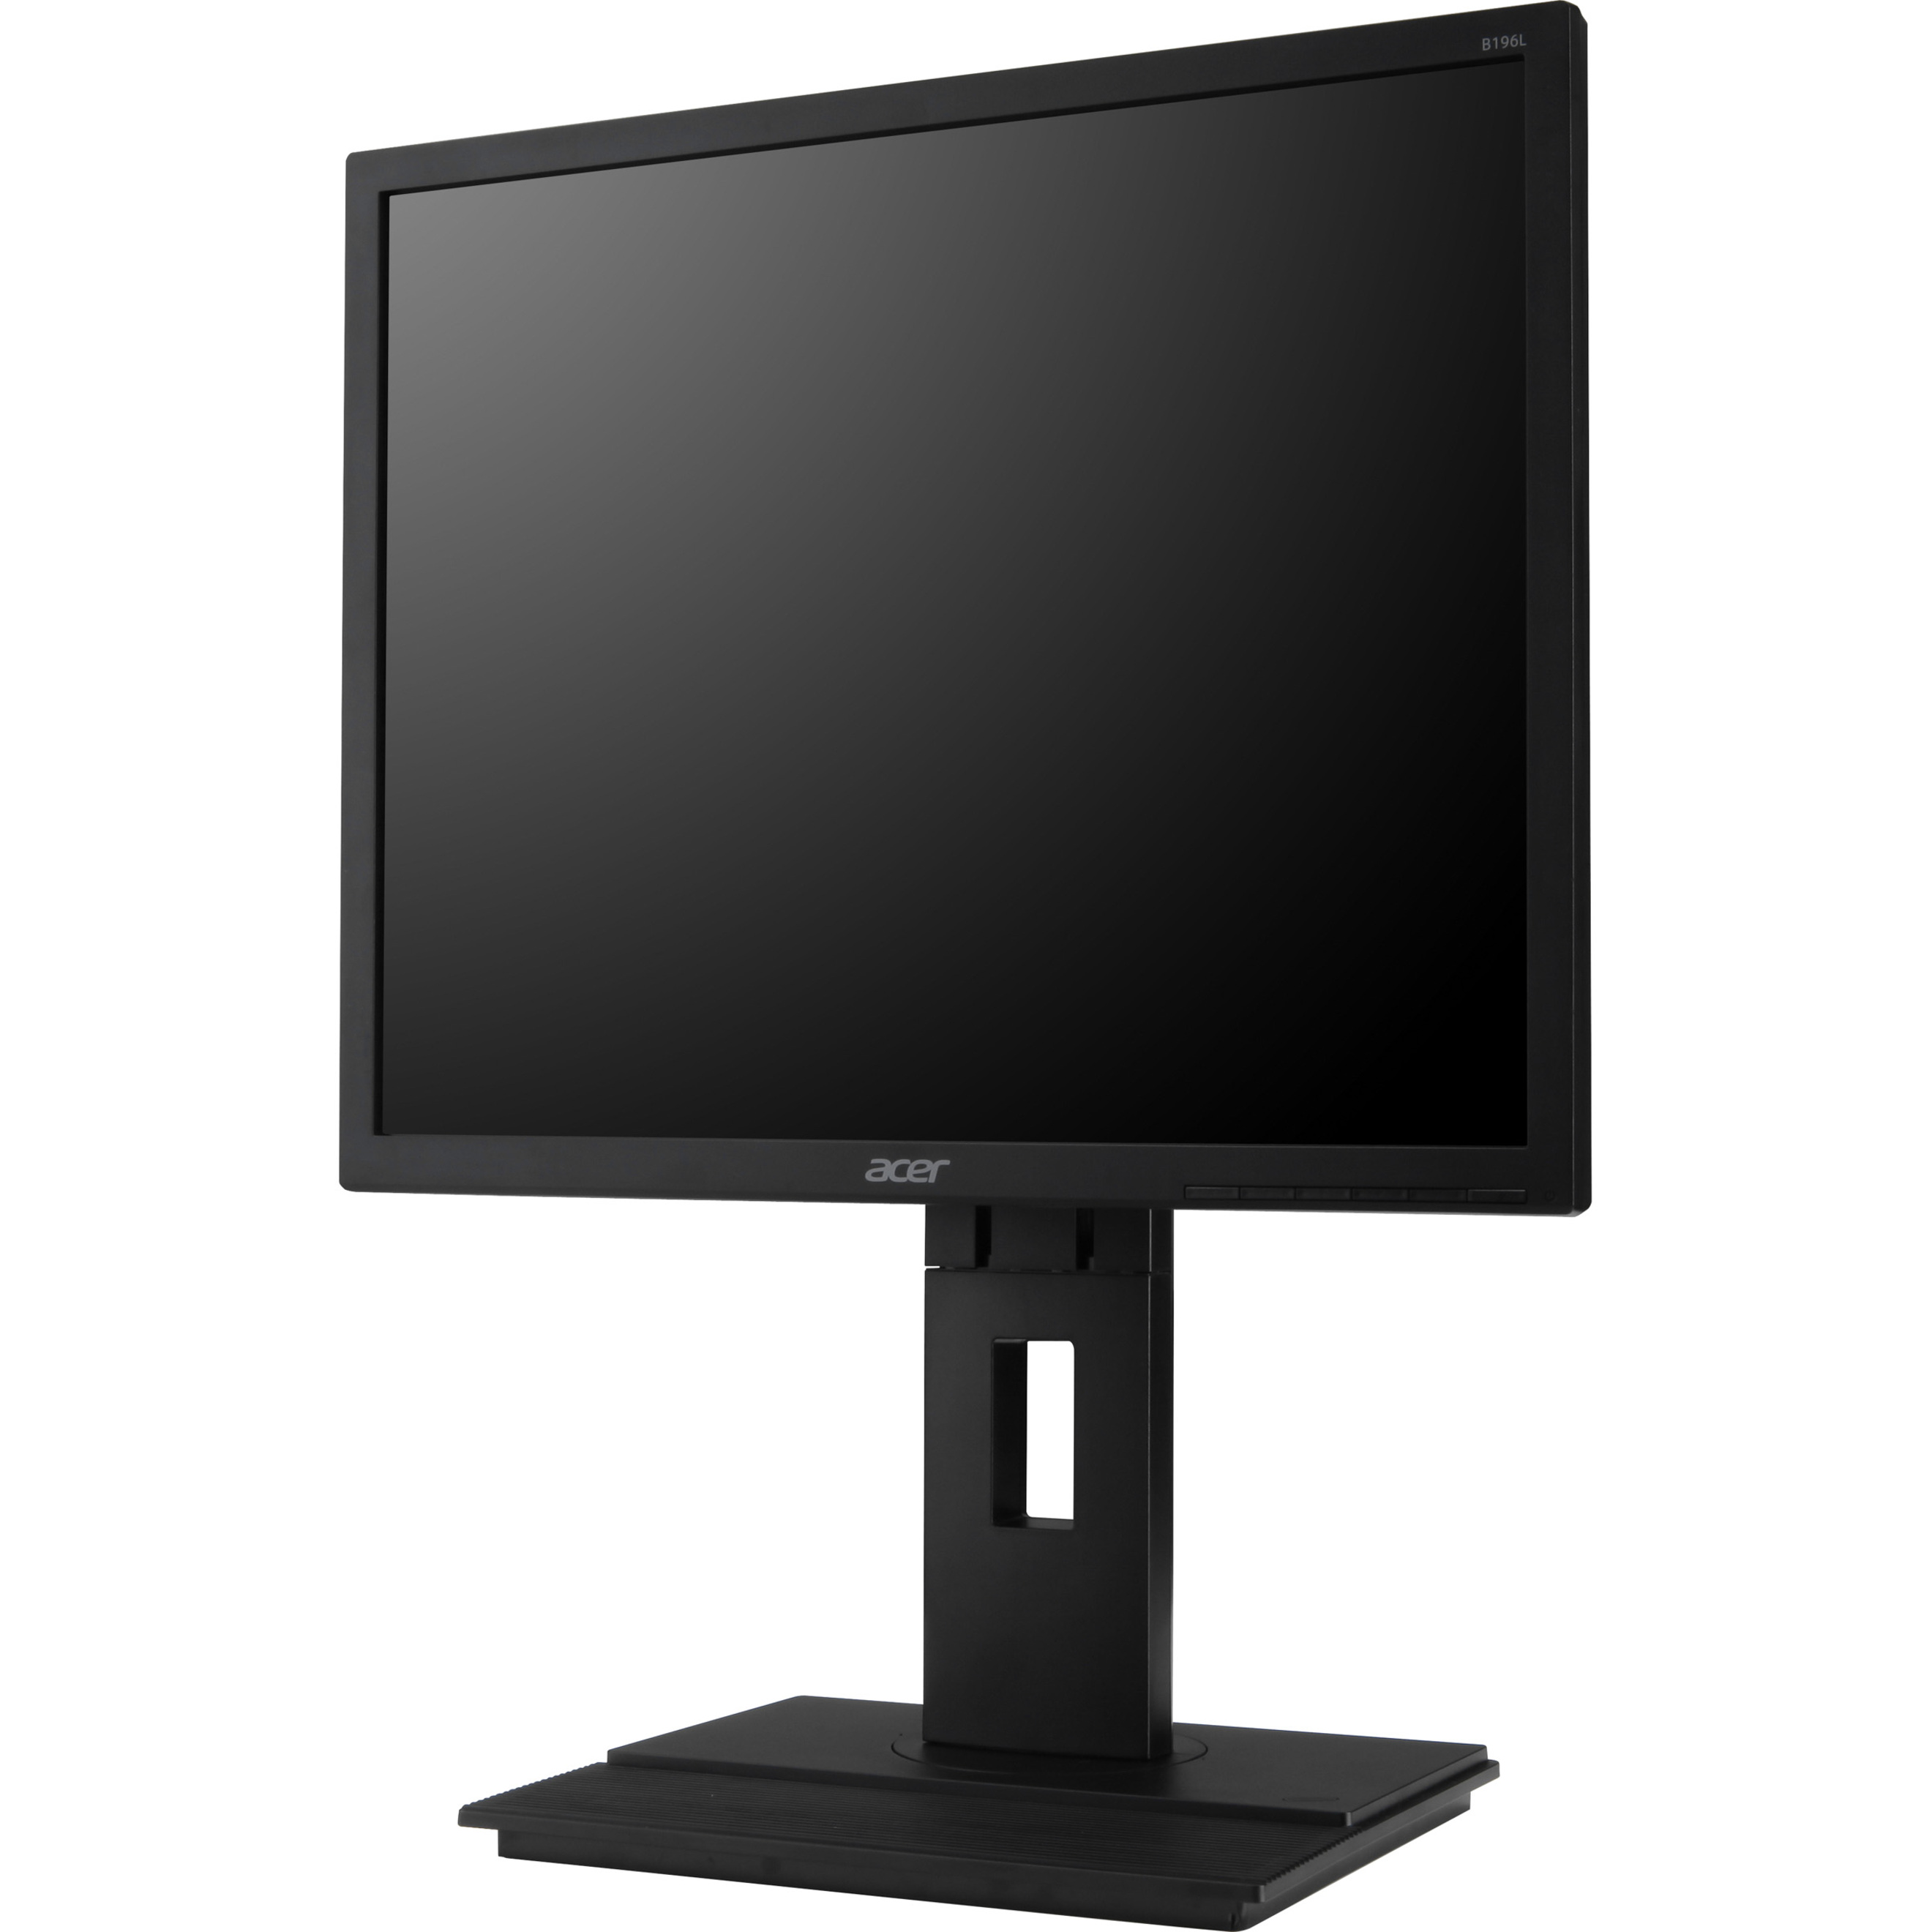 Acer B196L - LED monitor - 19" - image 4 of 5